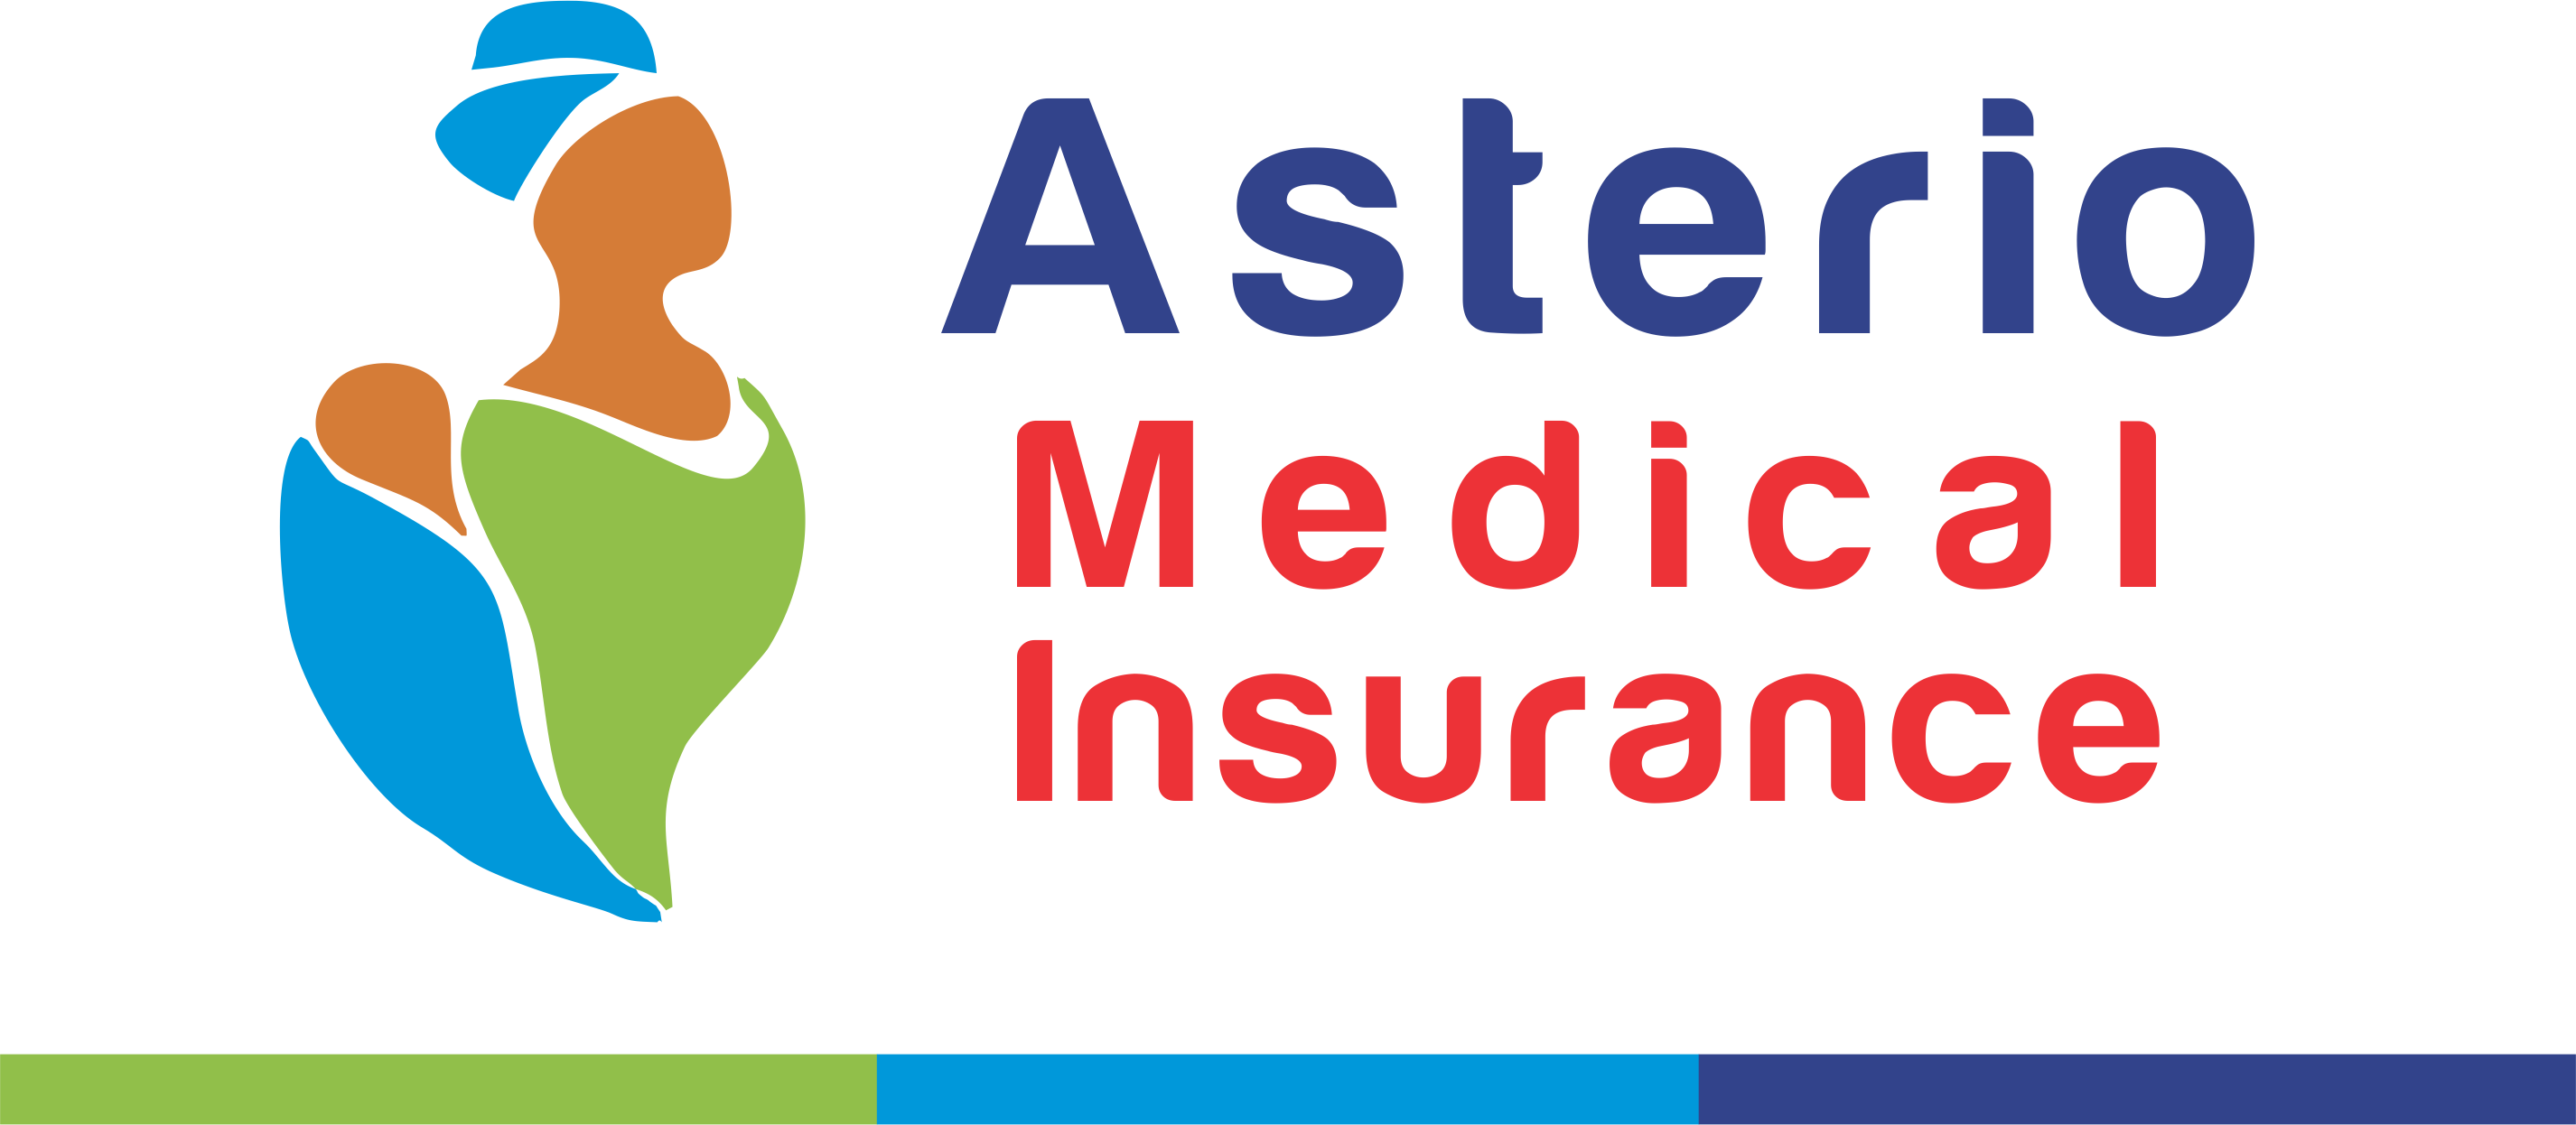 Asterio Medical Insurance